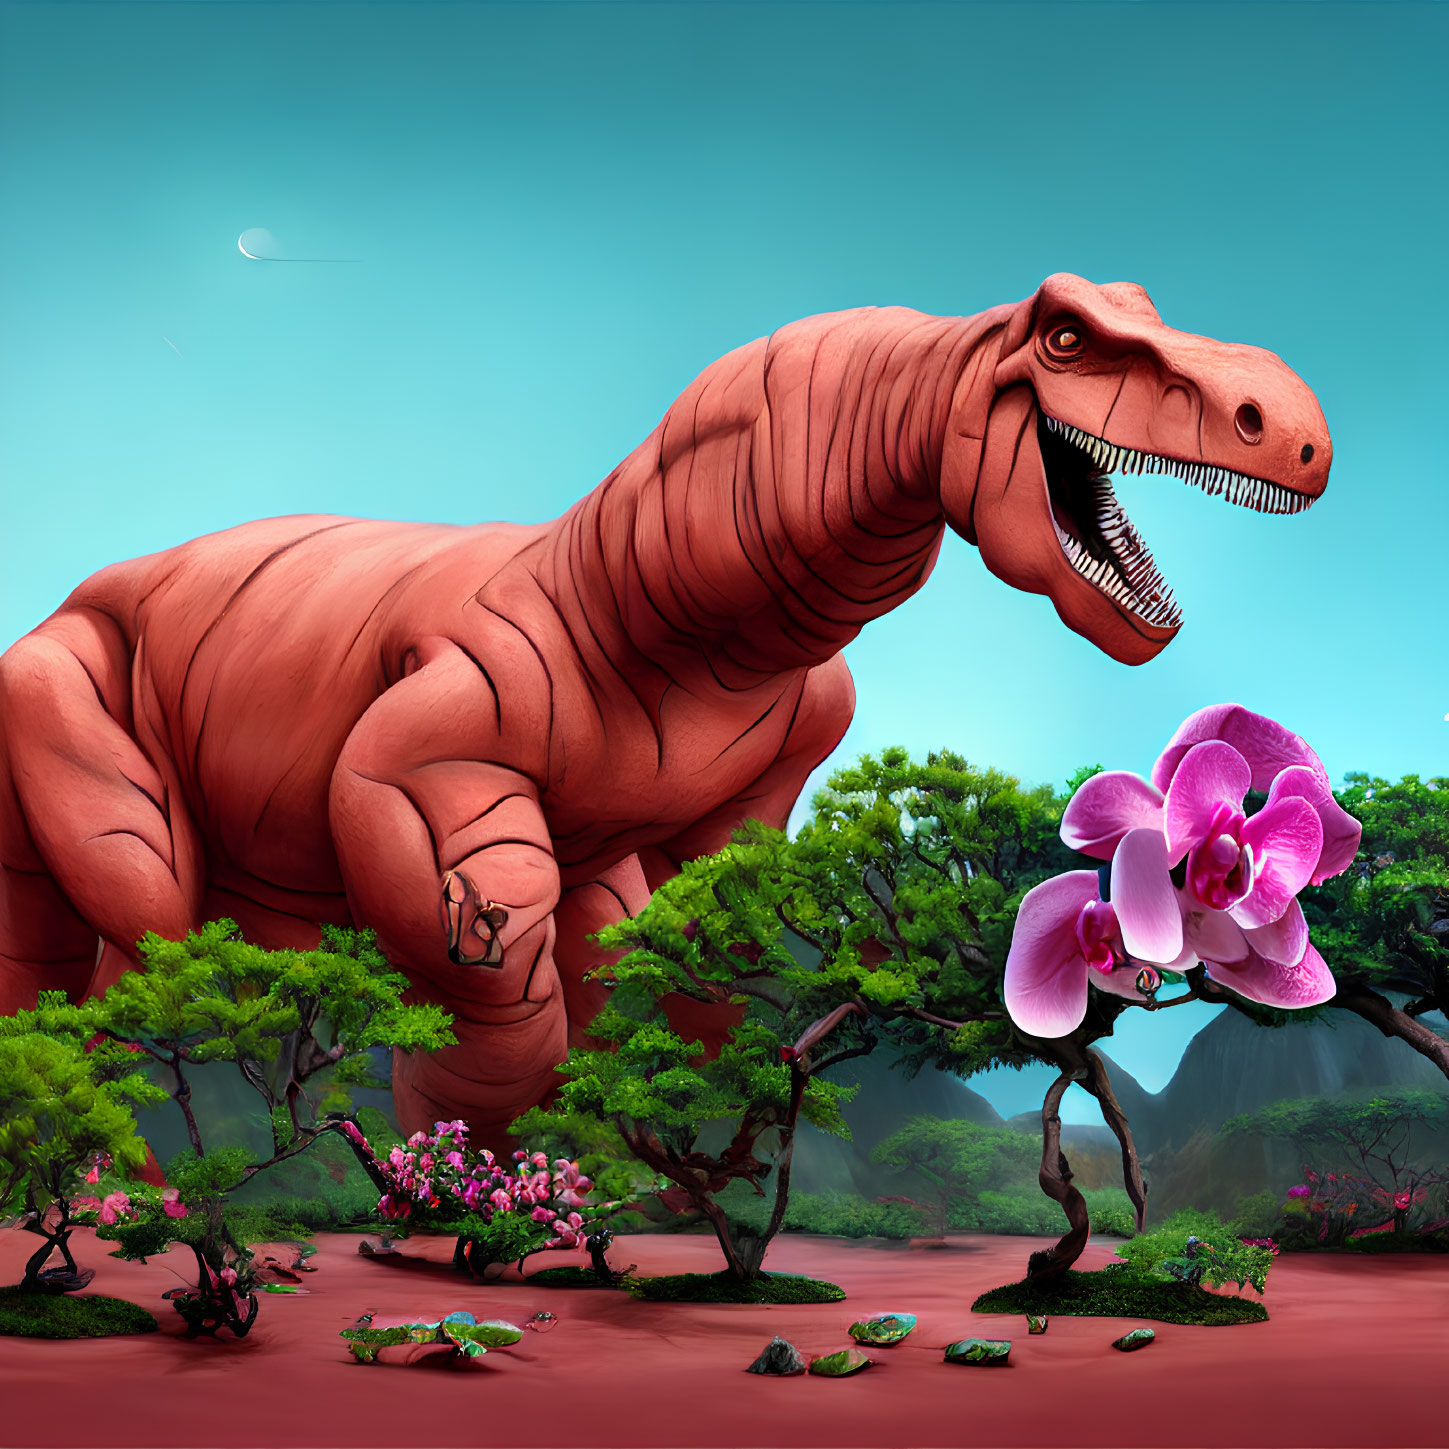 Large Reddish-Brown Tyrannosaurus Rex in Colorful Landscape